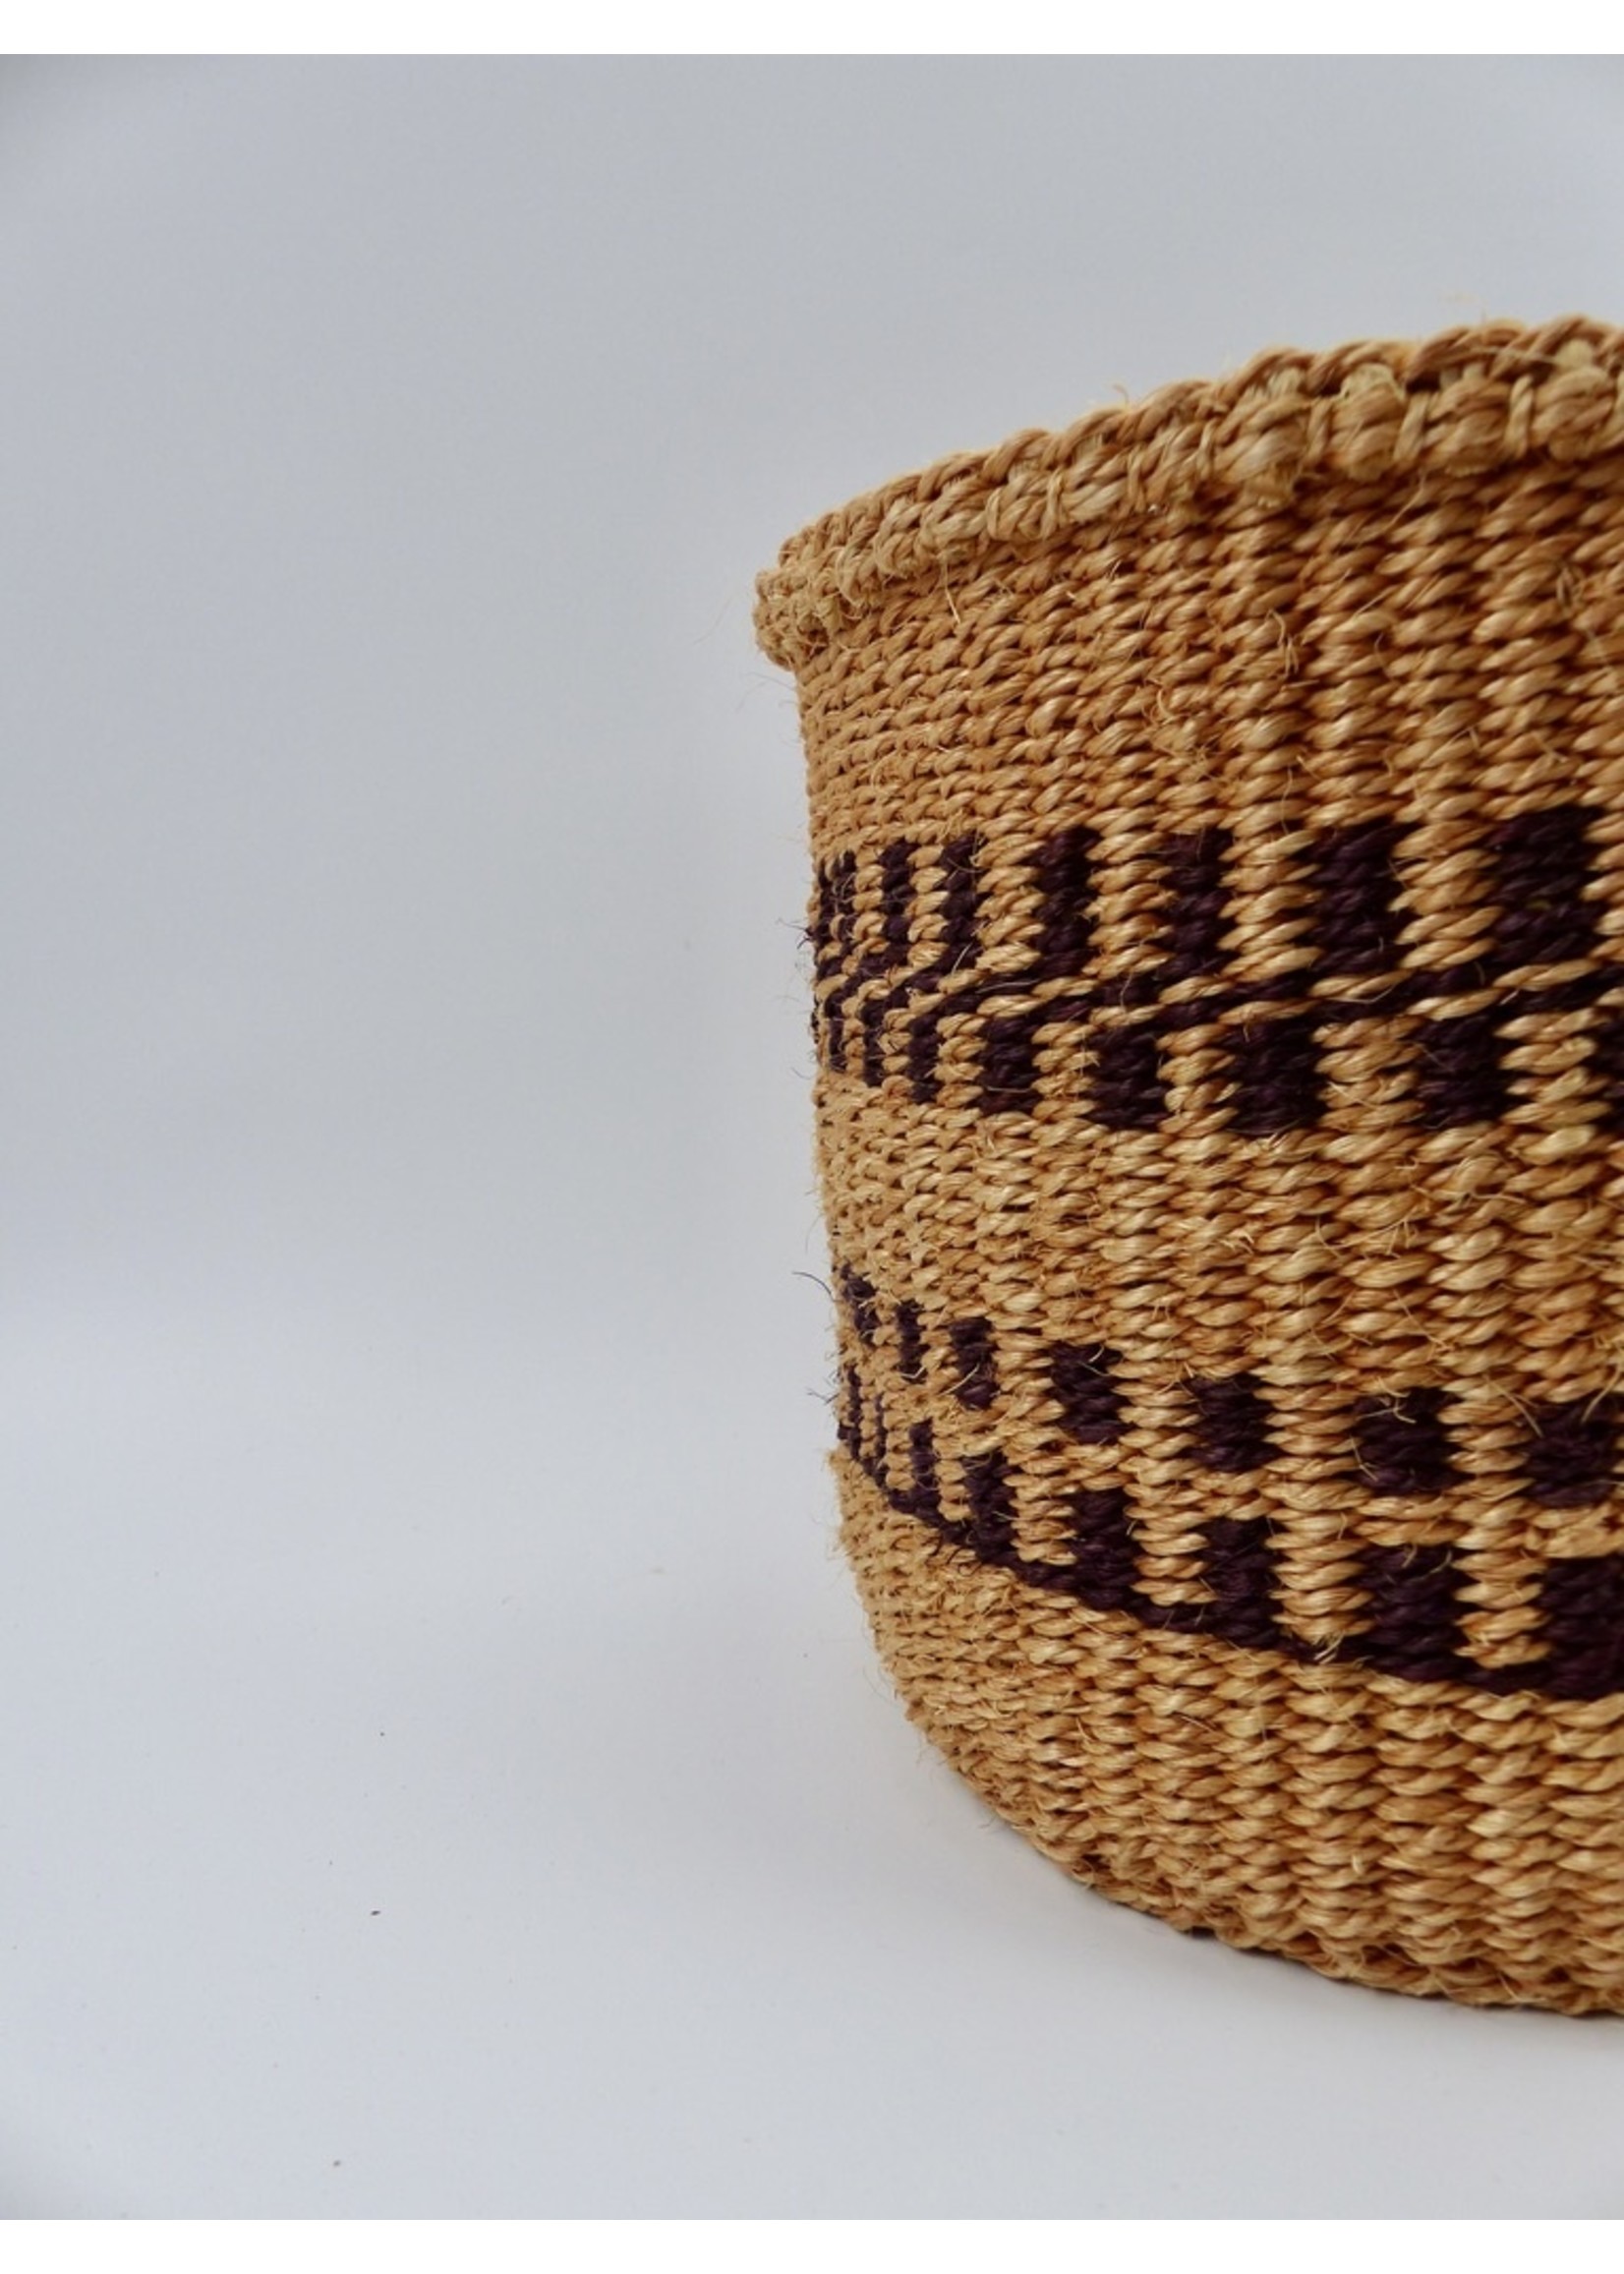 Hadithi Hadithi Basket S - Neutral brown zigzag by Grace Mzoghora